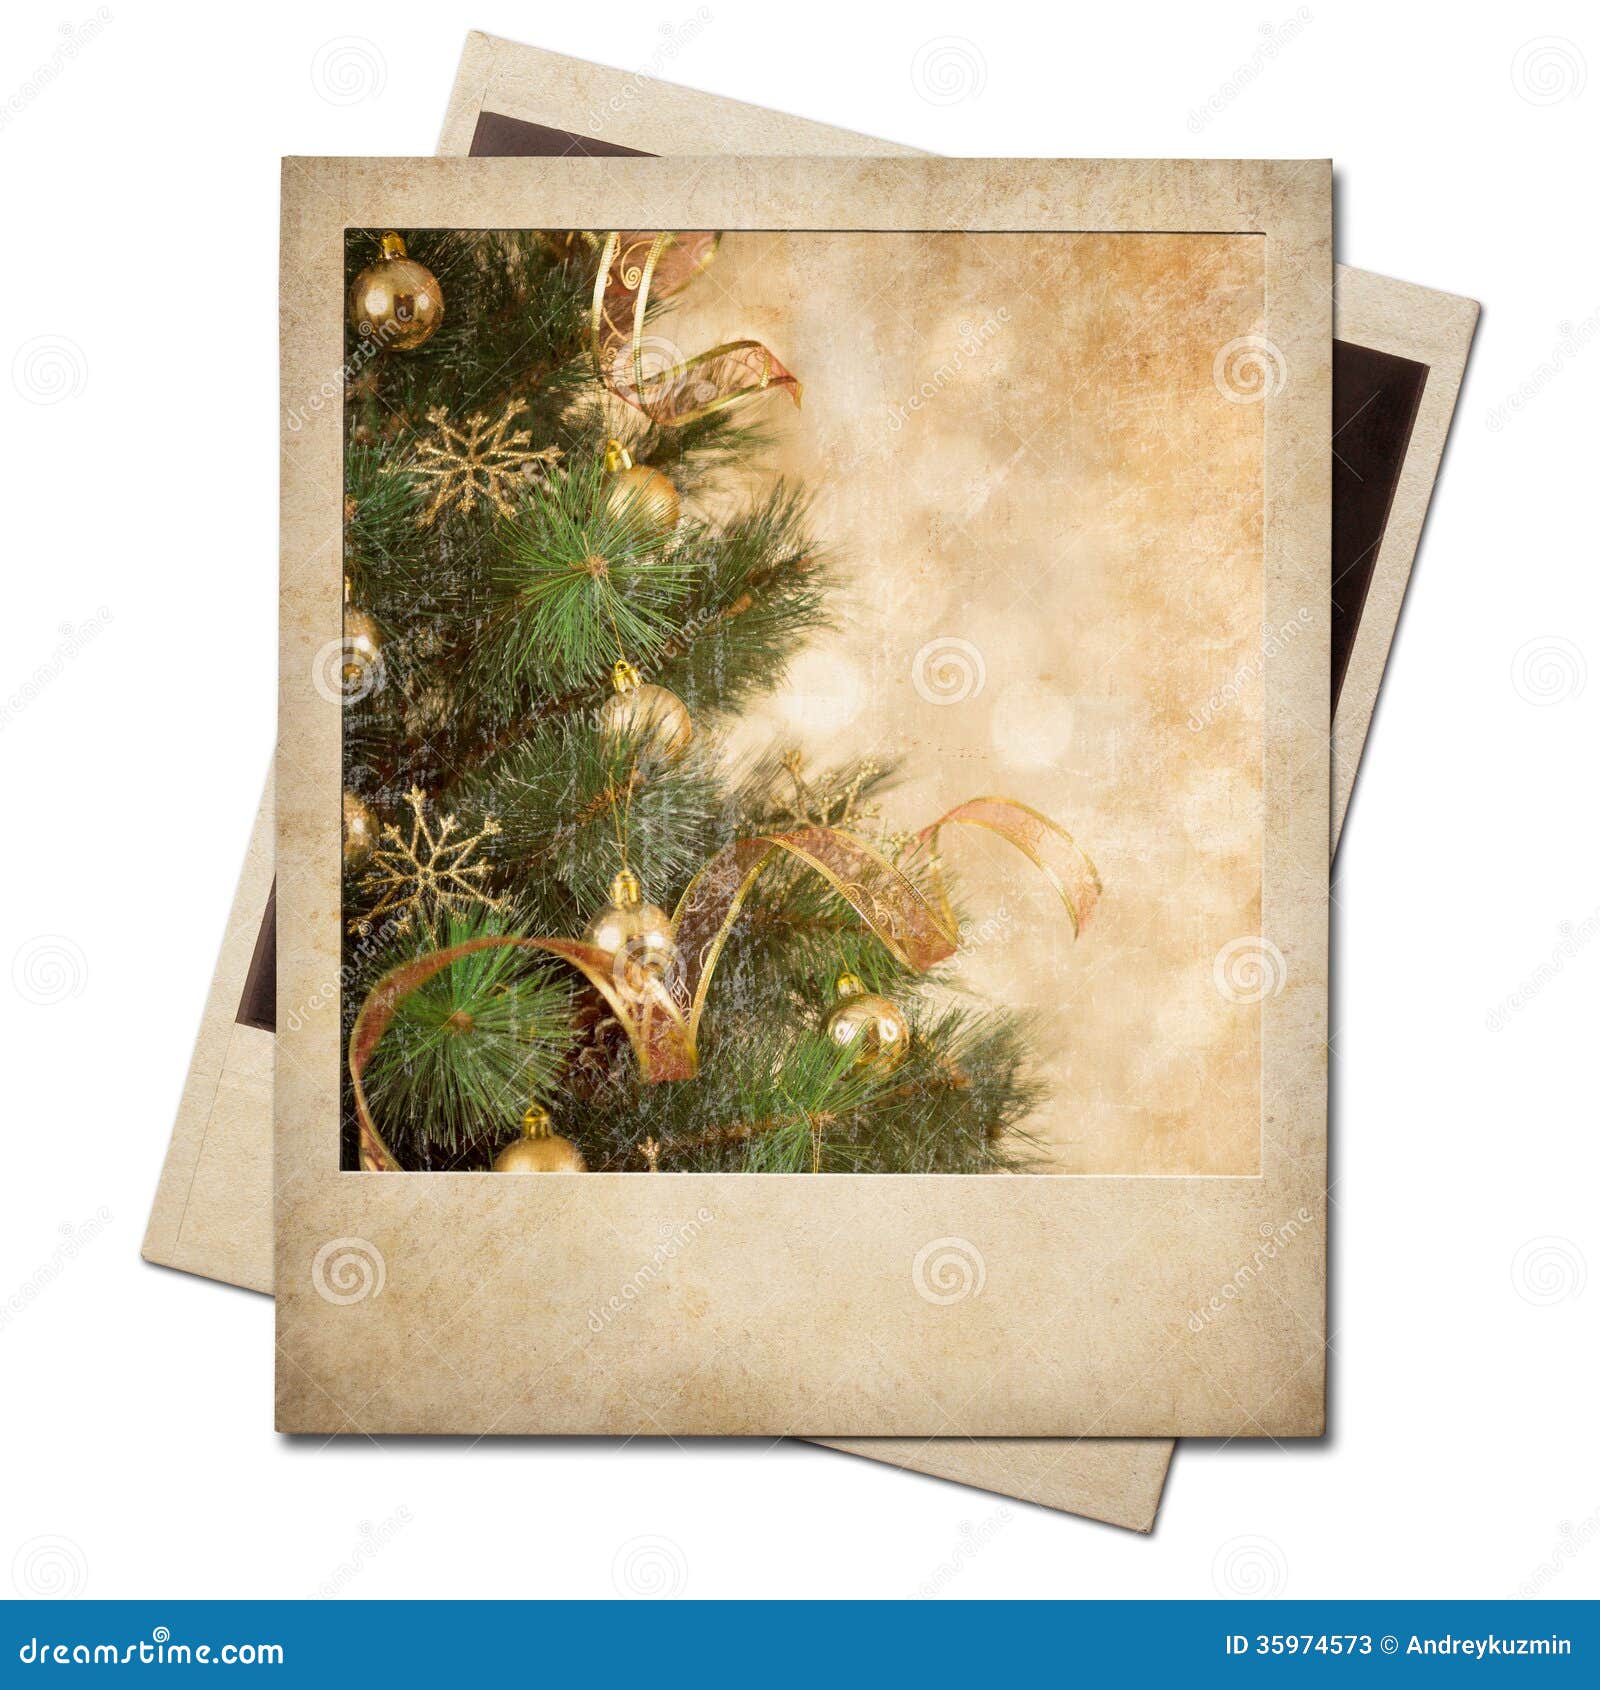 Christmas Tree Polaroid Old Photo Frame Stock Image Image Of Polaroid Tree 35974573